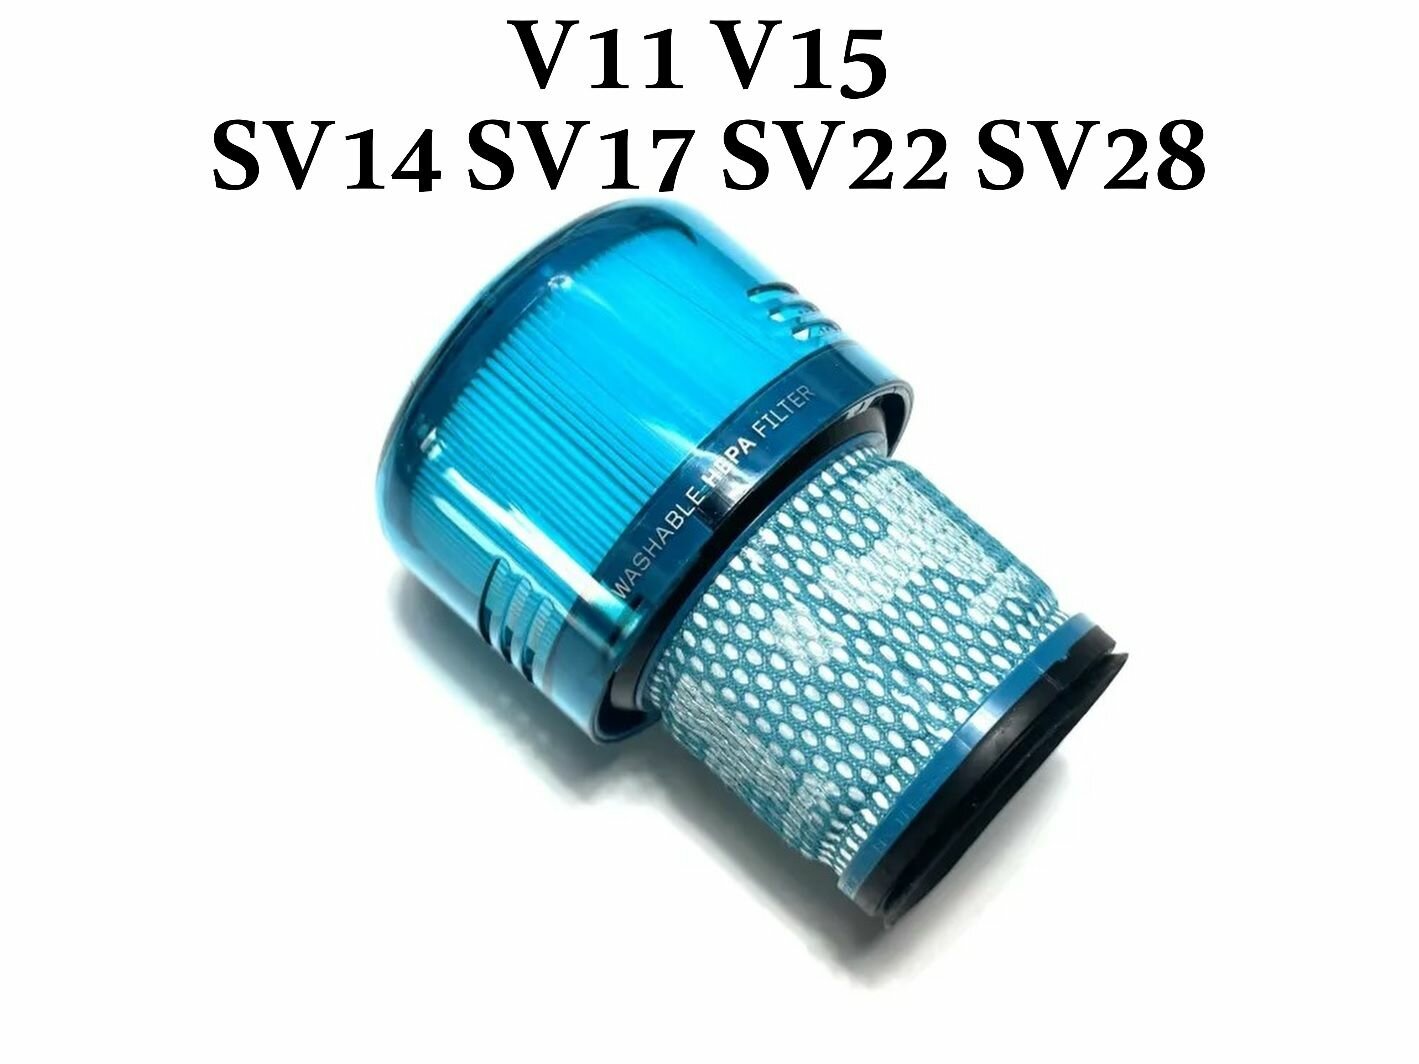 Фильтр Hepa для пылесосов Dyson V11, V15, SV14, SV17, SV22, SV28, SV47